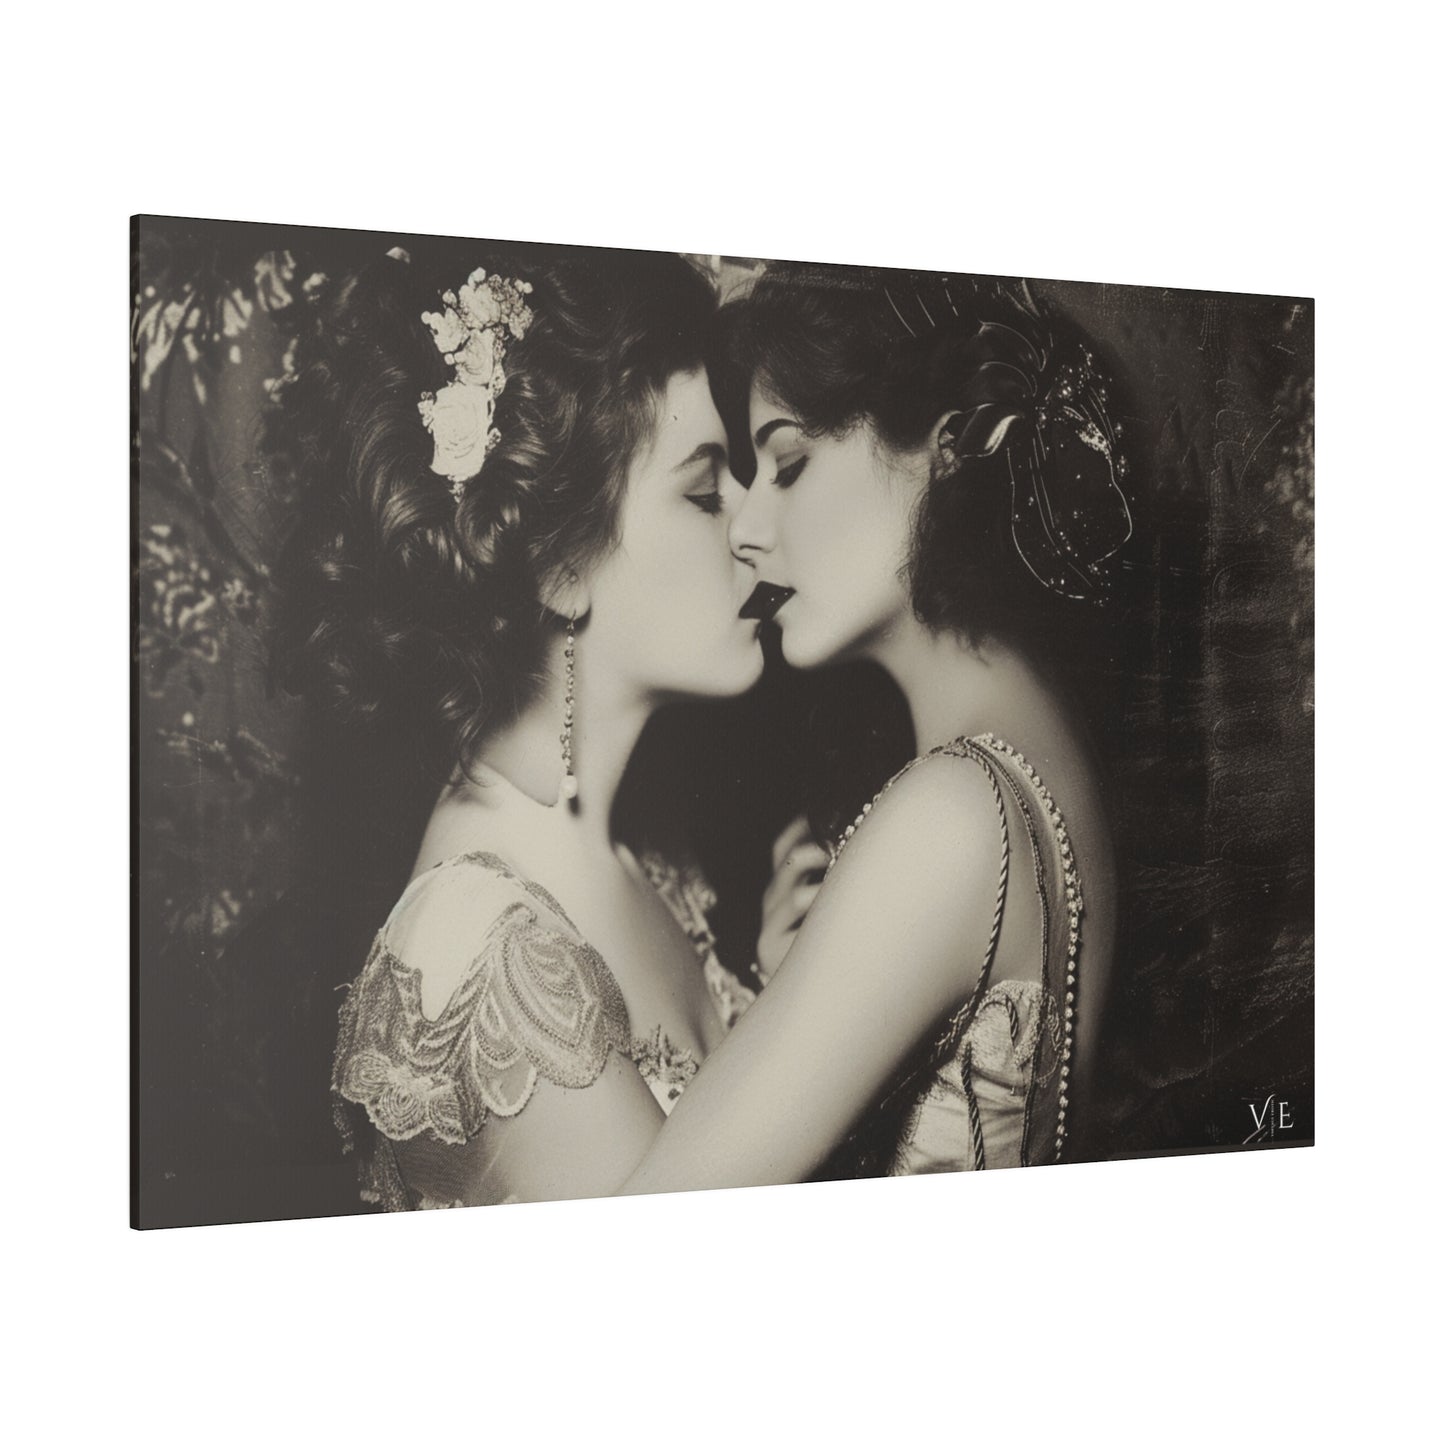 Retro Romance - Vintage Lesbian Erotic Art on Canvas